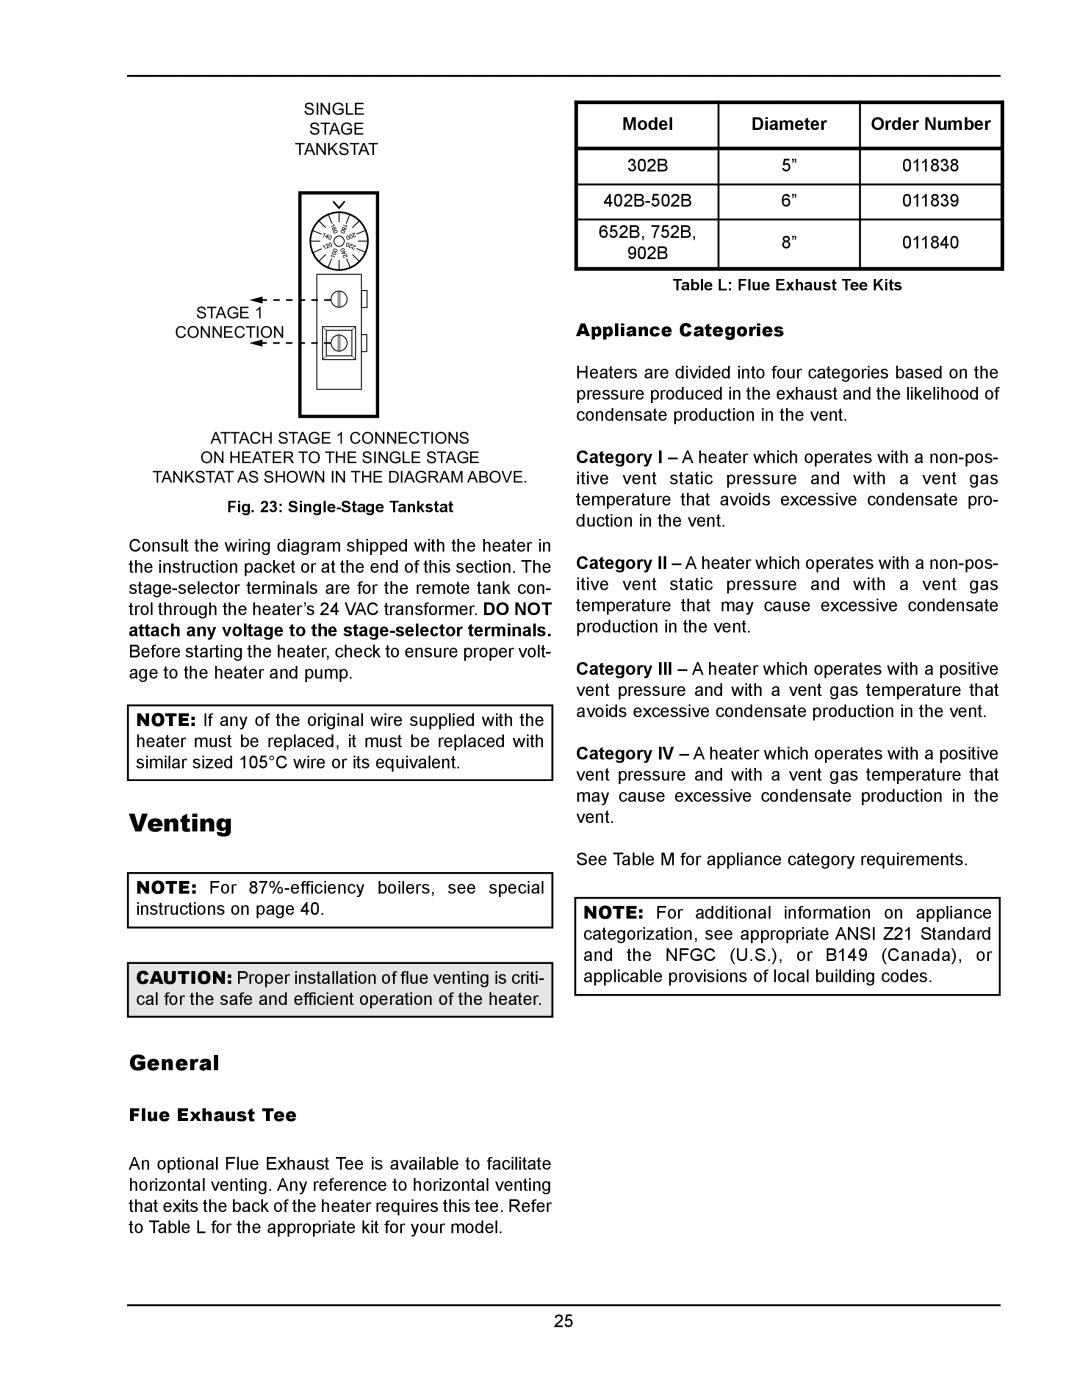 Raypak 302B, 902B manual Venting, Flue Exhaust Tee, Model, Diameter, Order Number, Appliance Categories 